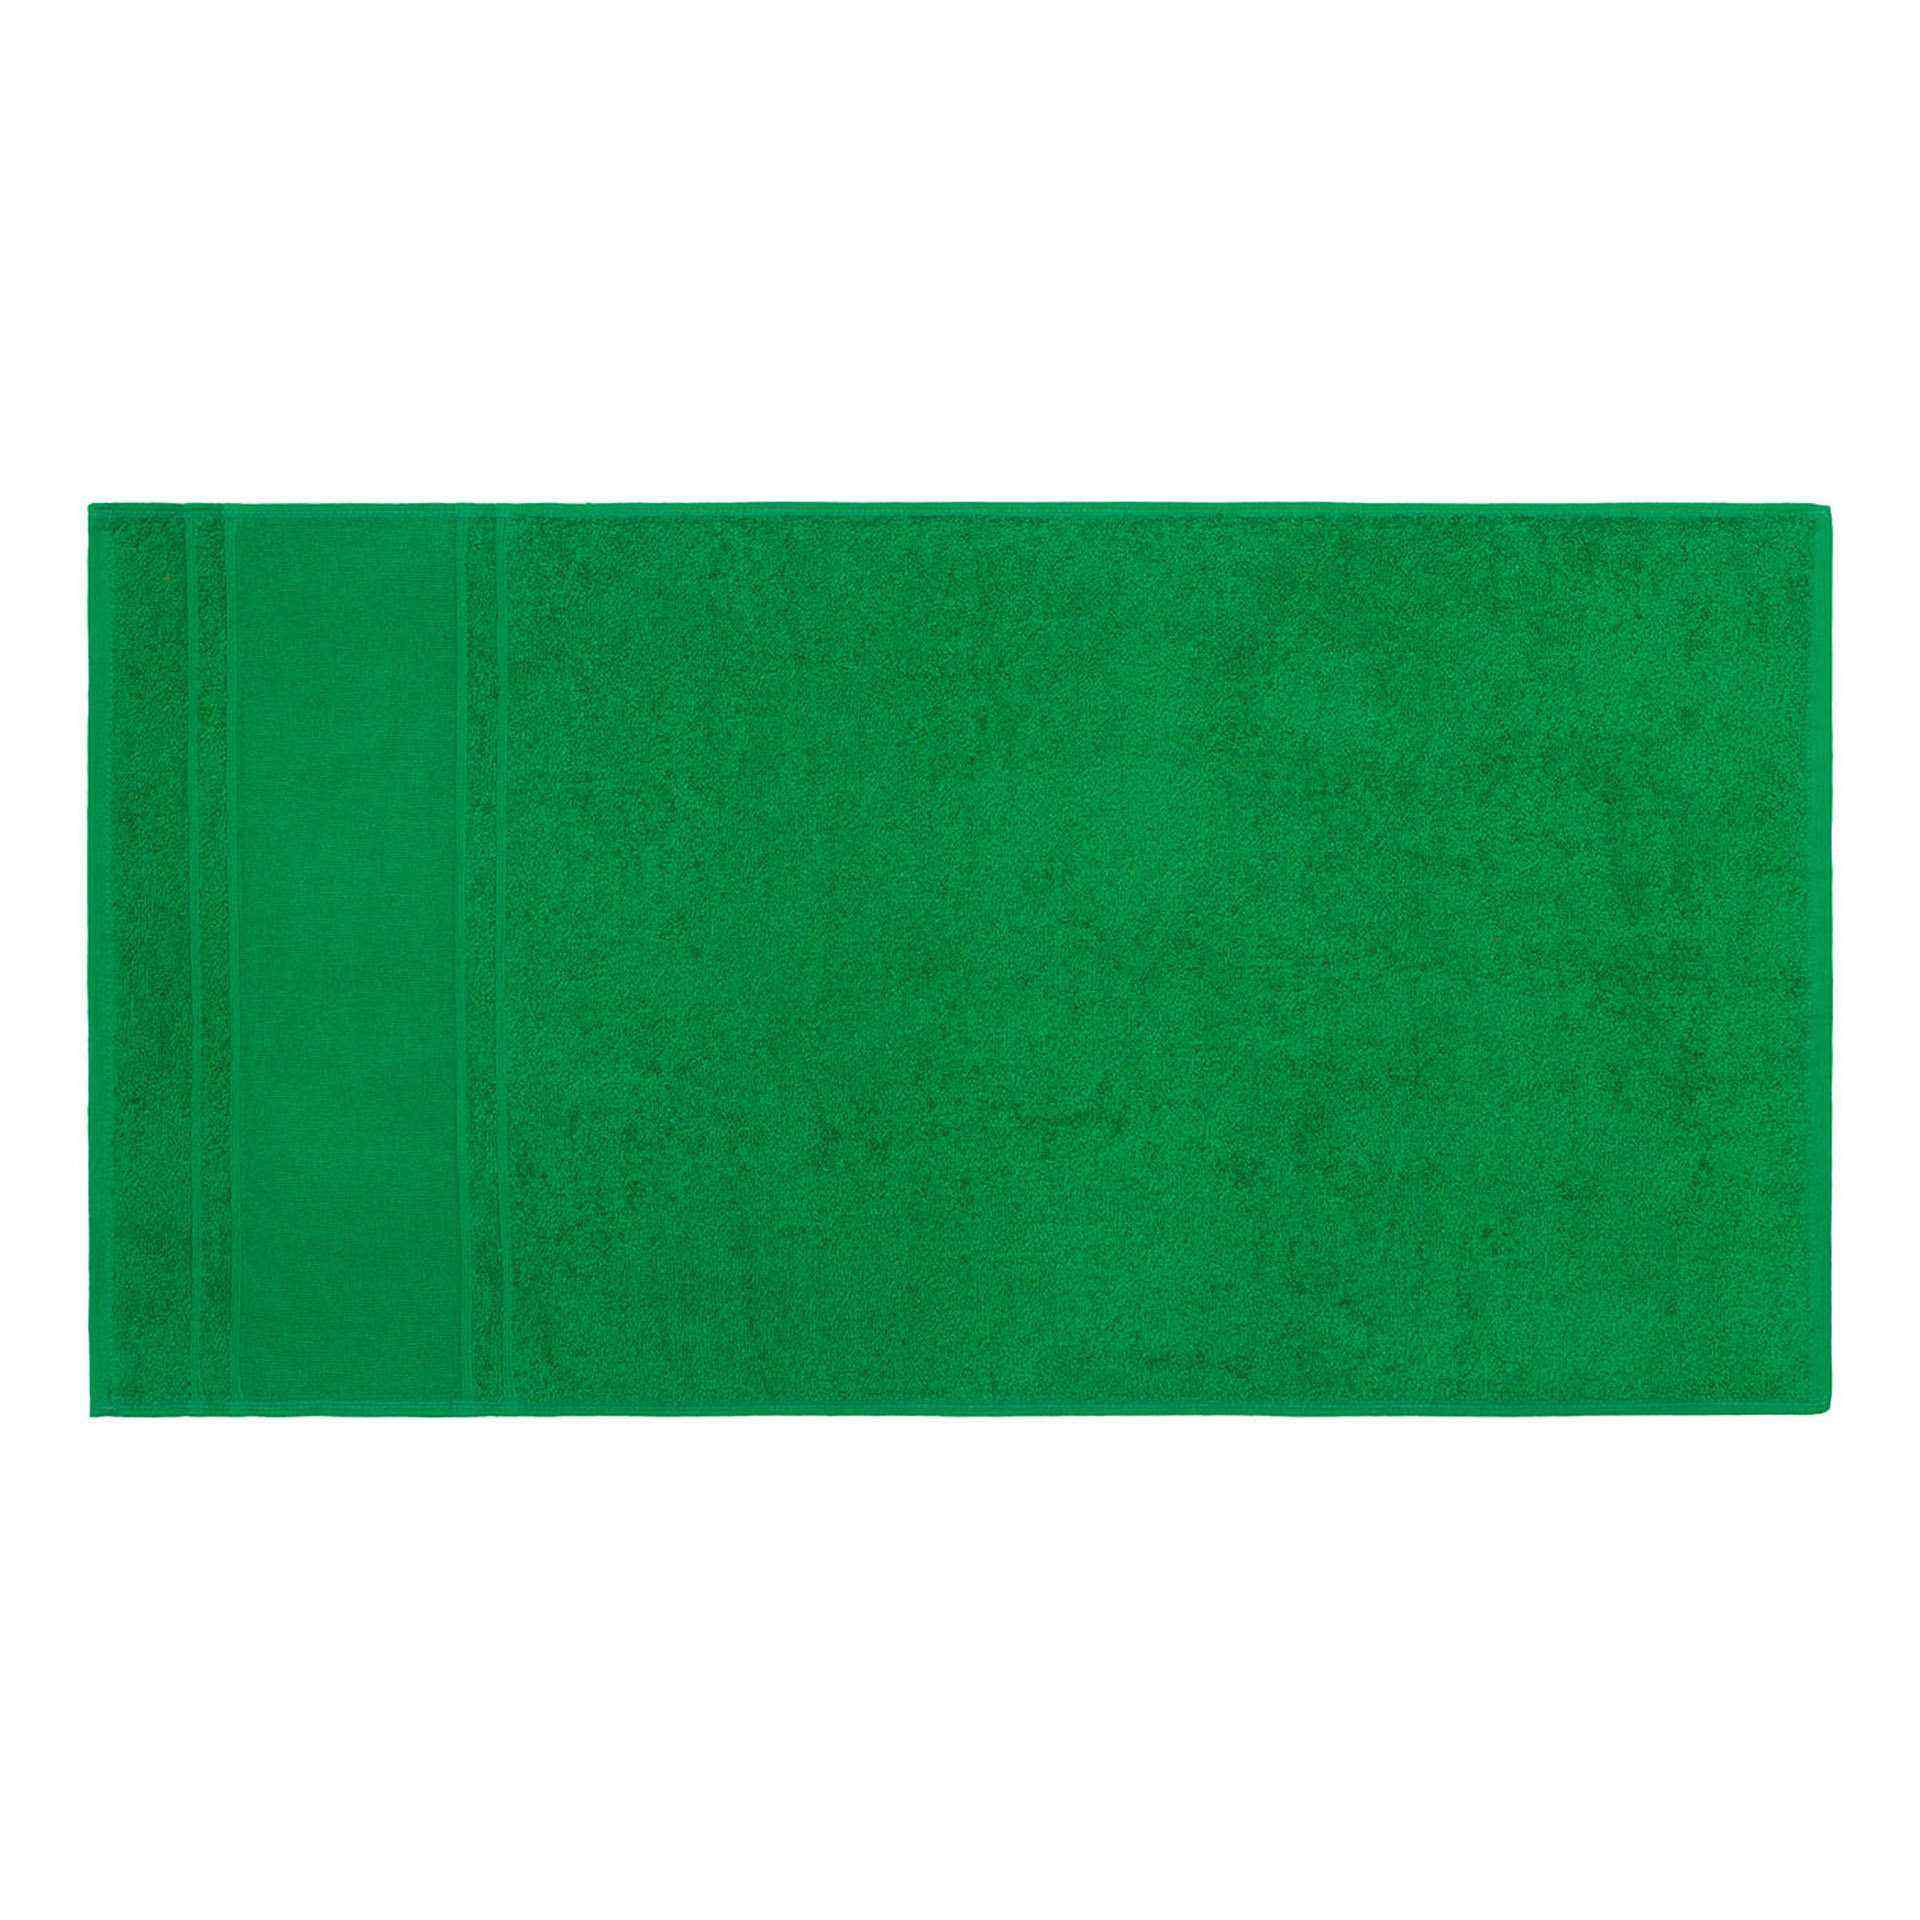 Duschtuch - Serie PORTO - grün - Abm. 70 x 140 cm - Baumwolle - 200001-5-80-D